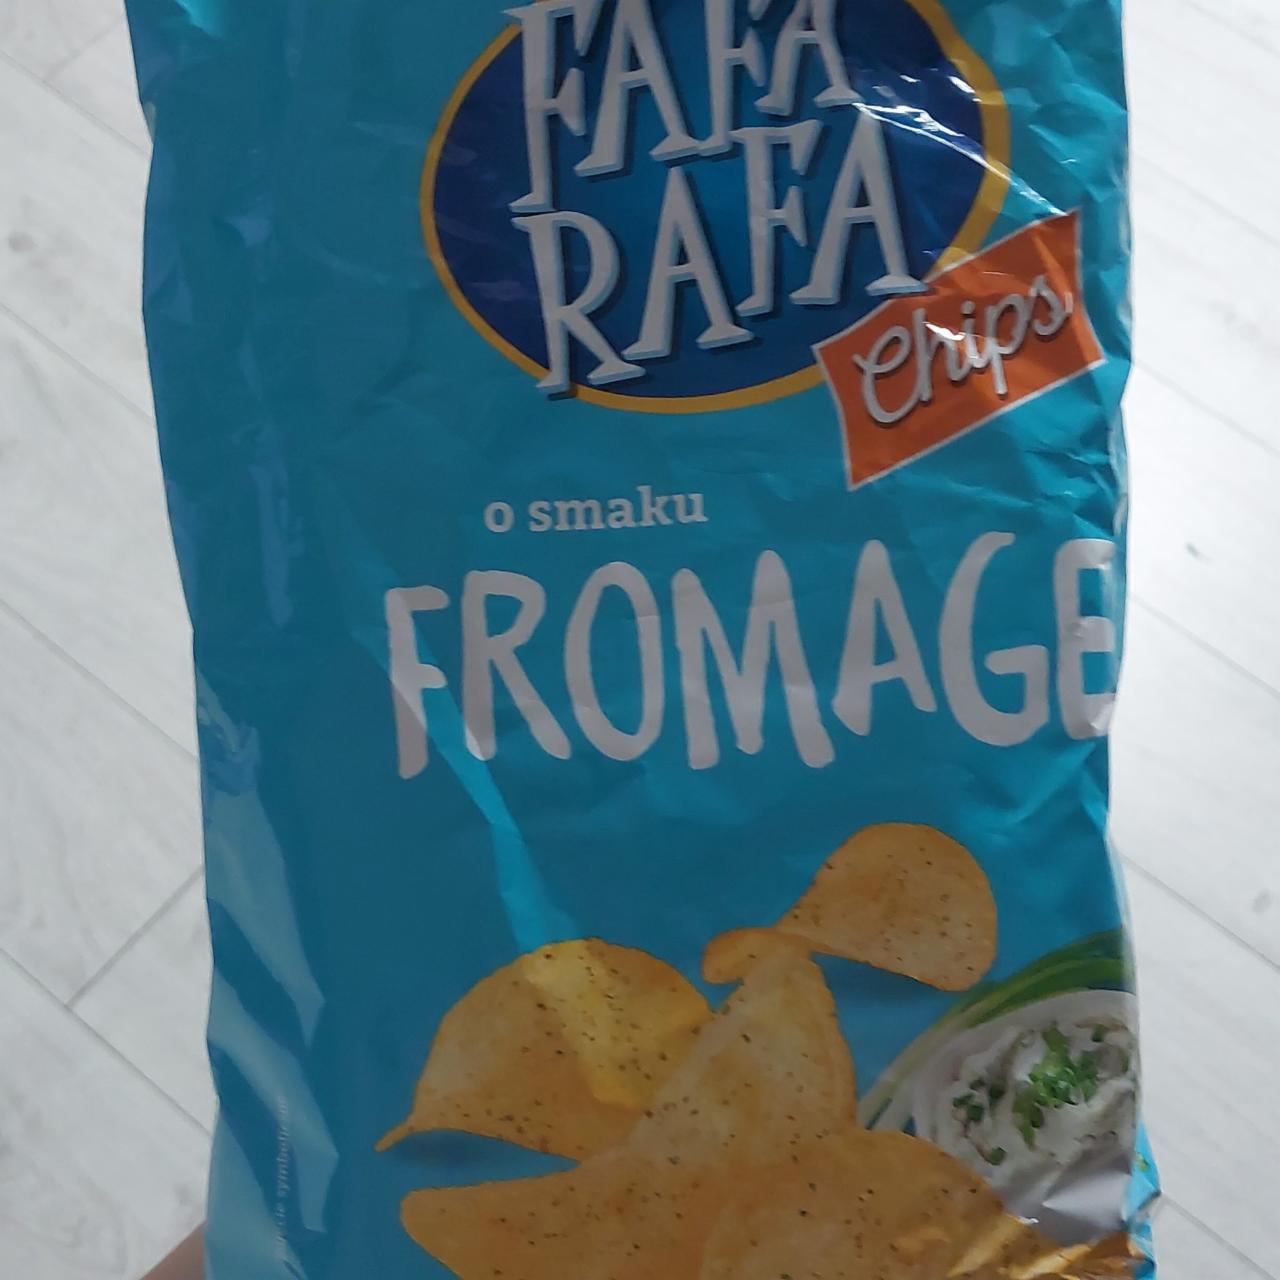 Zdjęcia - Fafa rafa chips o smaku fromage